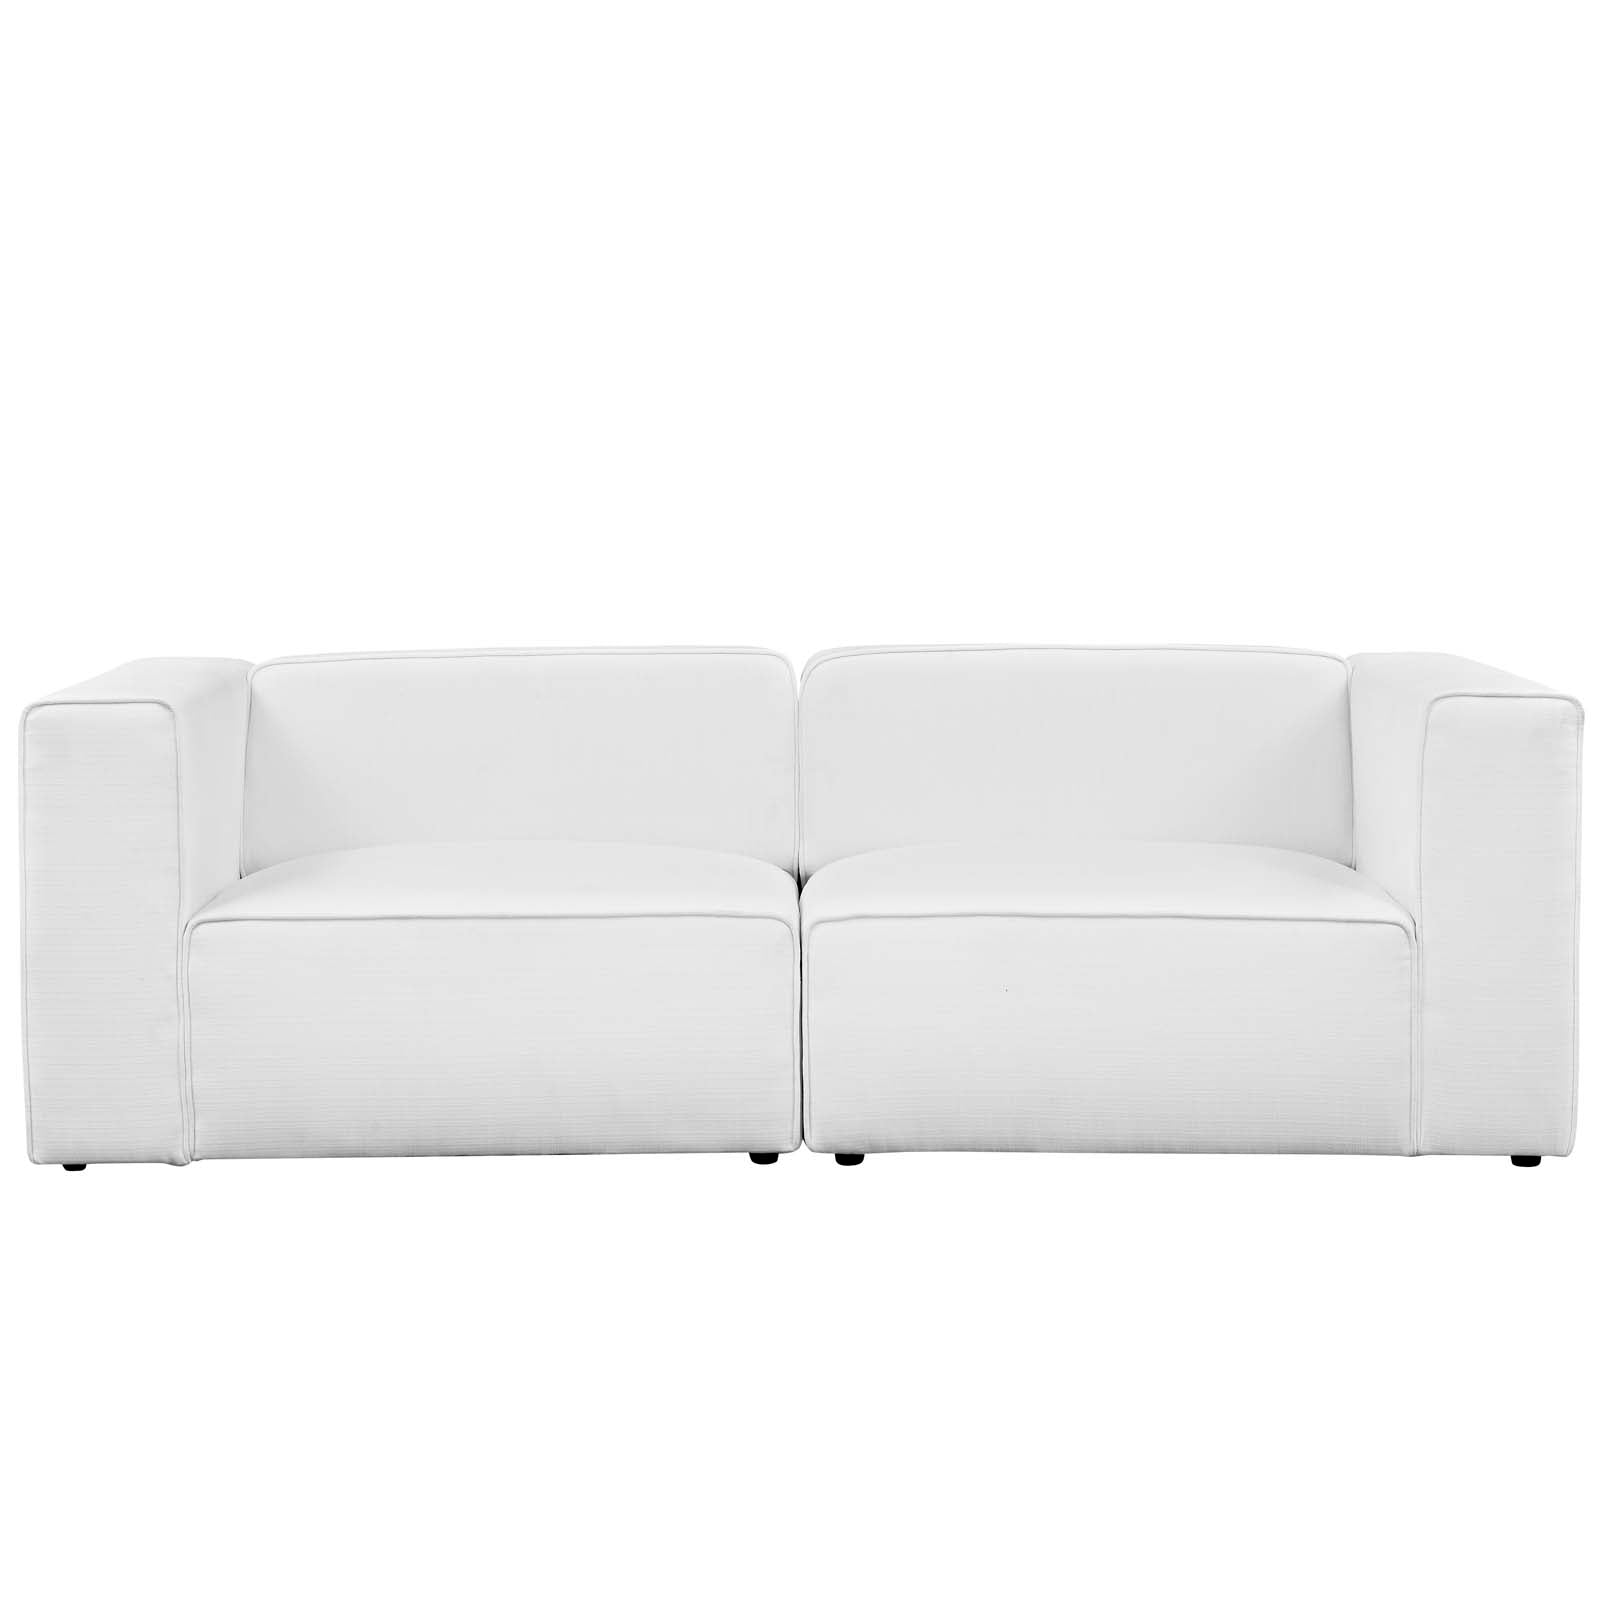 Mingle 2 Piece Upholstered Fabric Sectional Sofa Set - East Shore Modern Home Furnishings